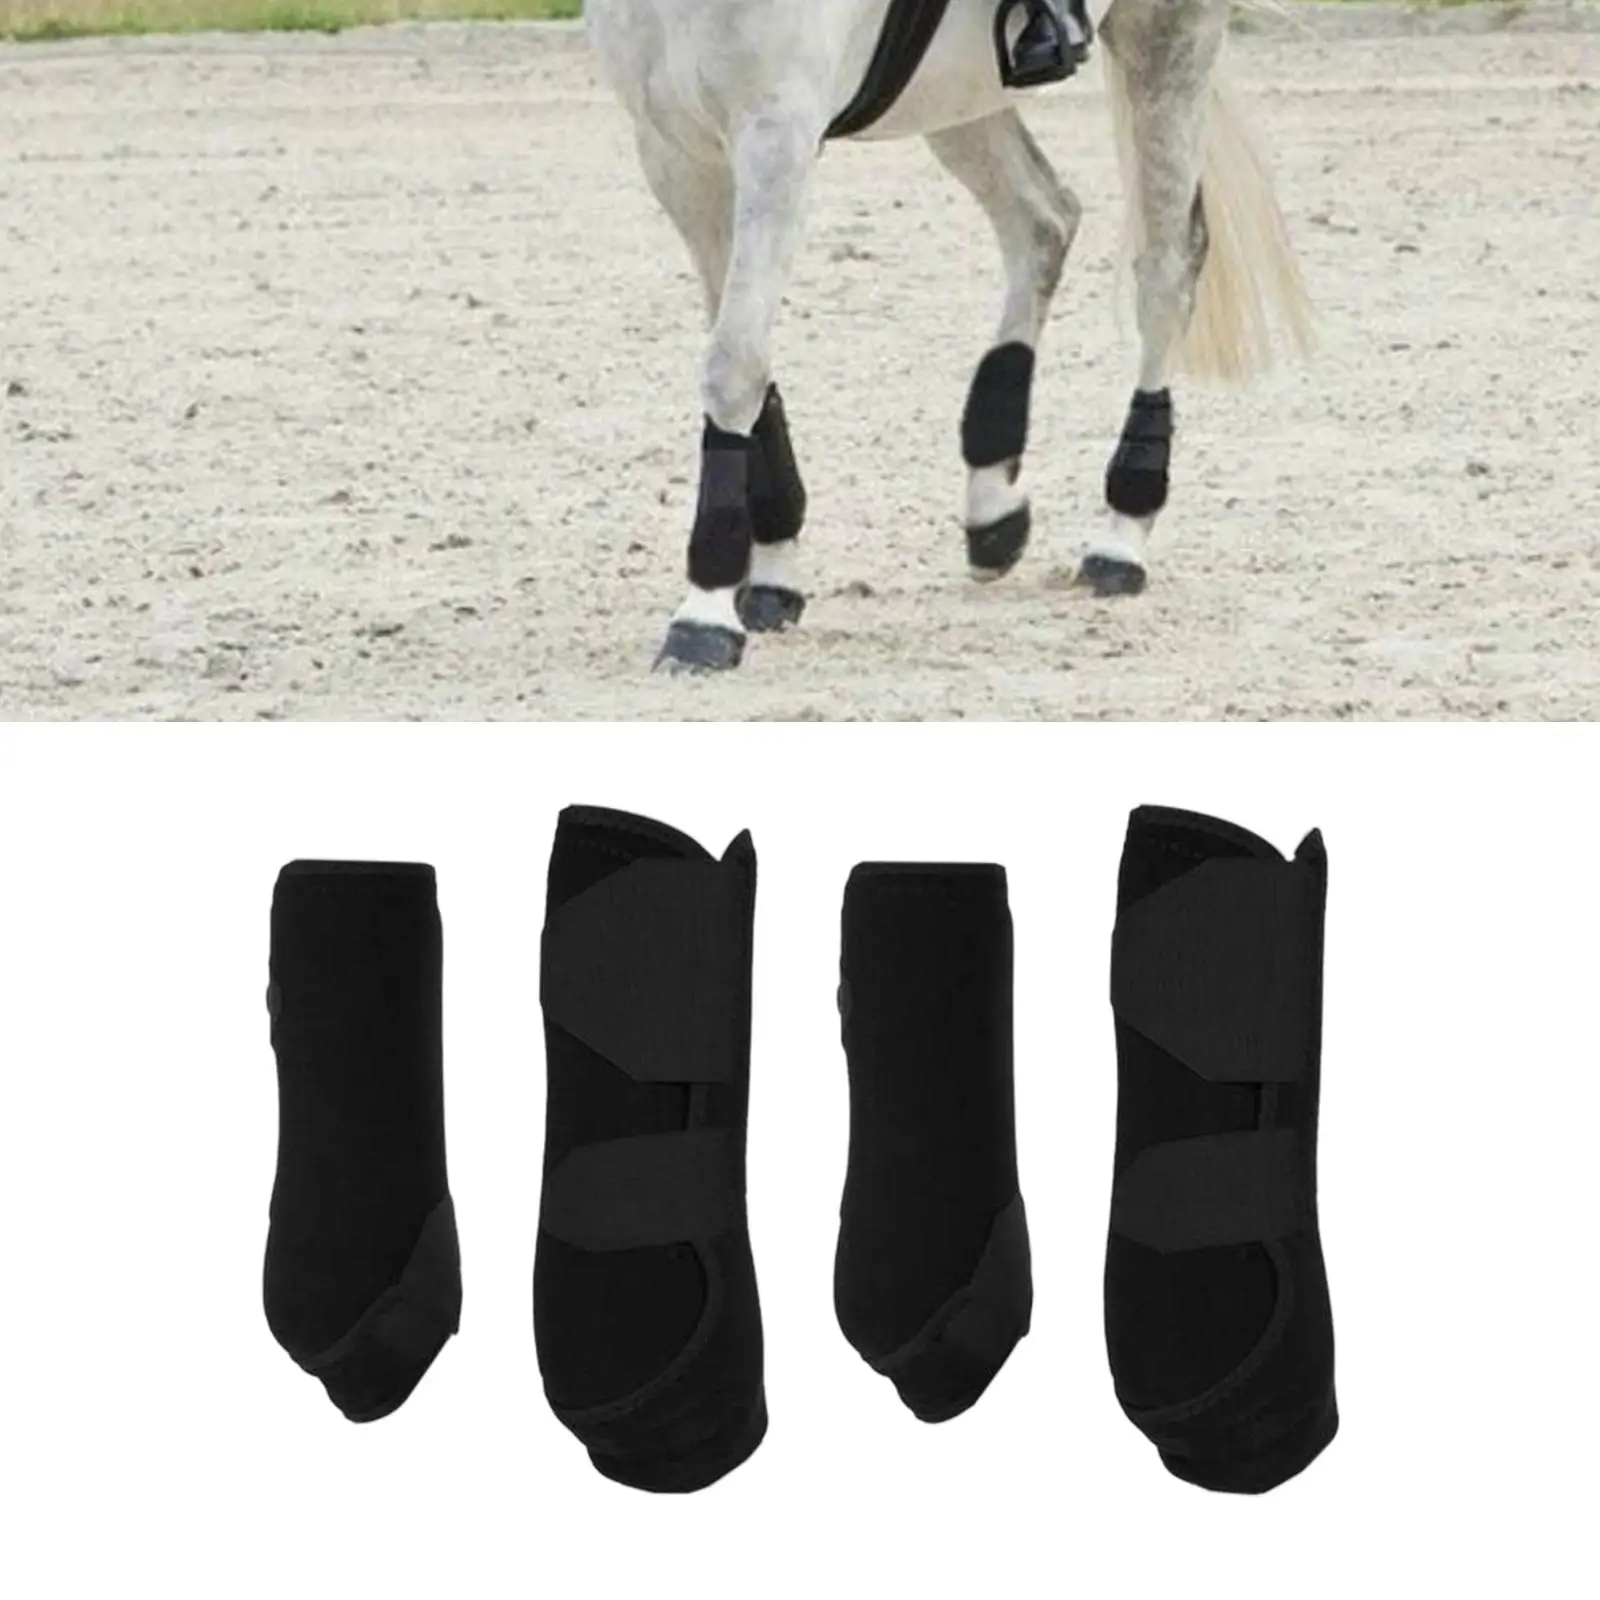 4Pcs Horse Boots Leg Wraps Shock Absorbing Guard for Riding Equestrian Equipment